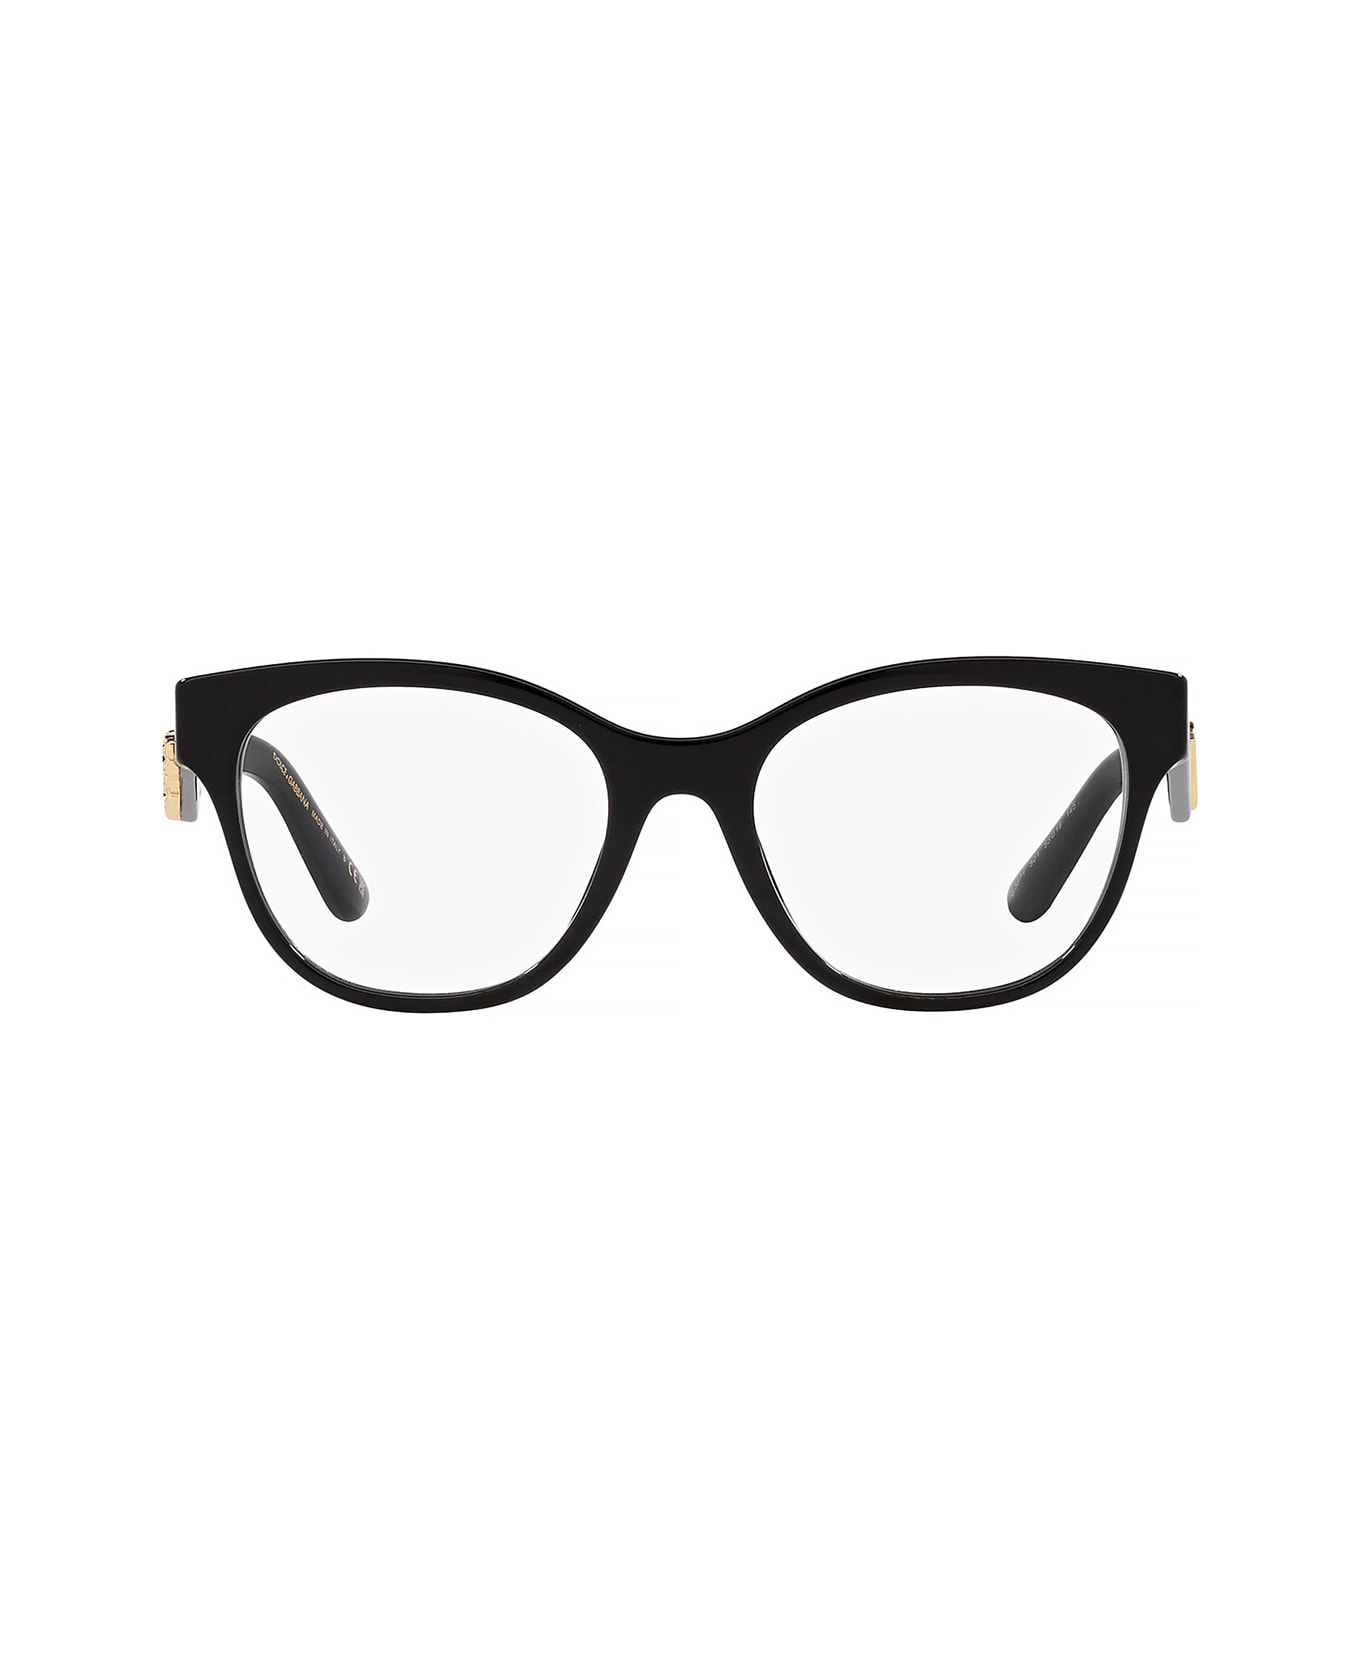 Dolce & Gabbana Eyewear Dg3371 501 Glasses - Nero アイウェア